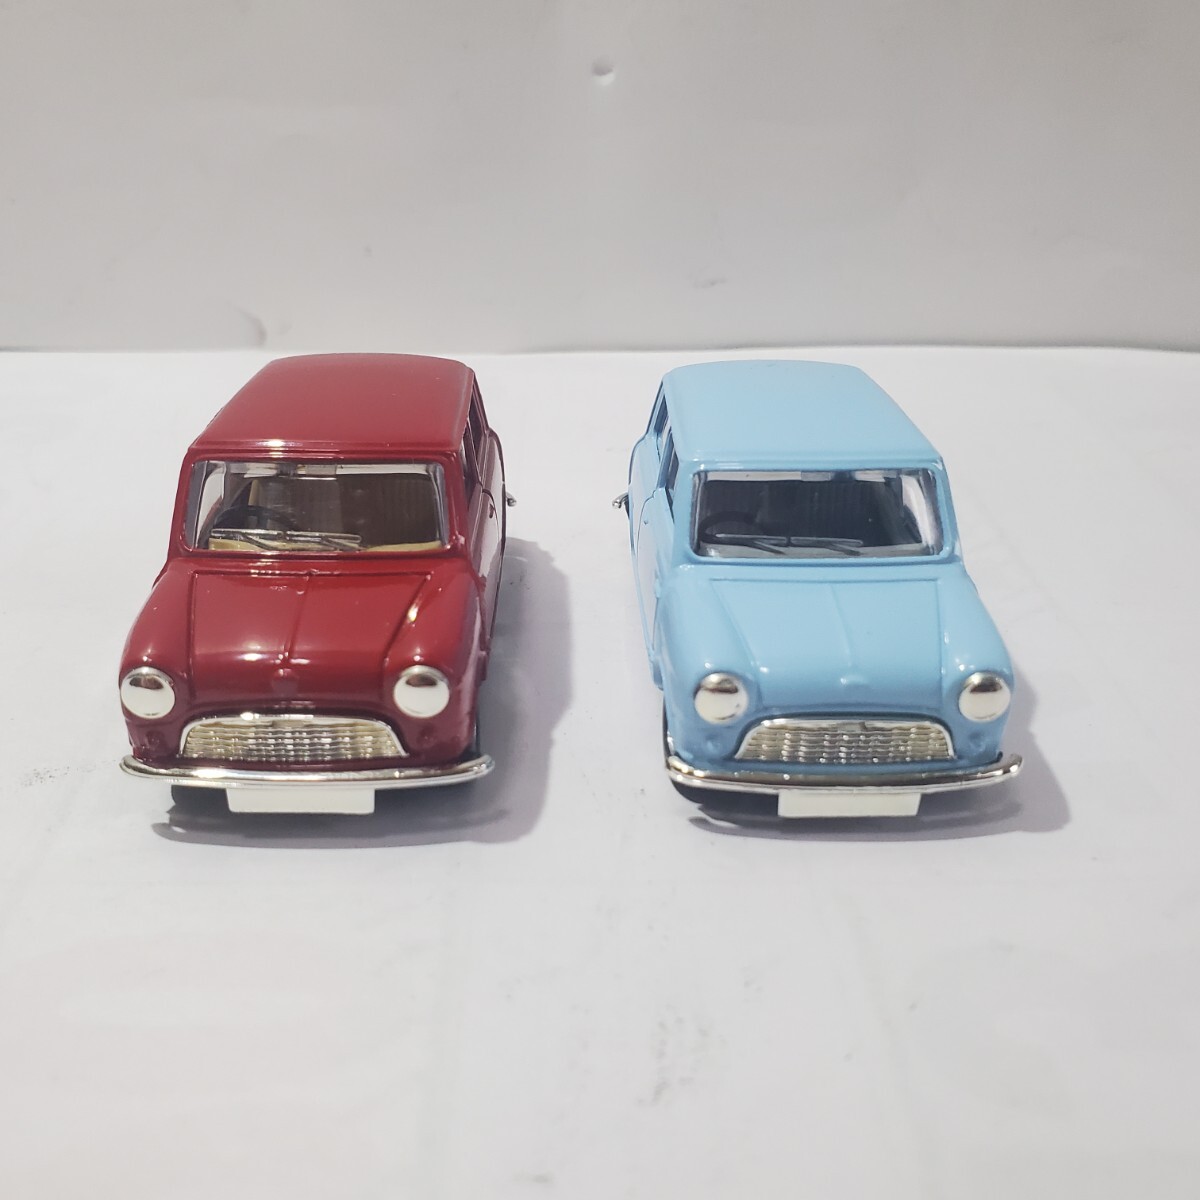 DAYS GONE ハンガーズ 「Austin 7 MINI 1959 赤」と「Austin 7 MINI 1959 青」 オースチン ミニ 2台セット イギリス製 新品未使用270_画像5